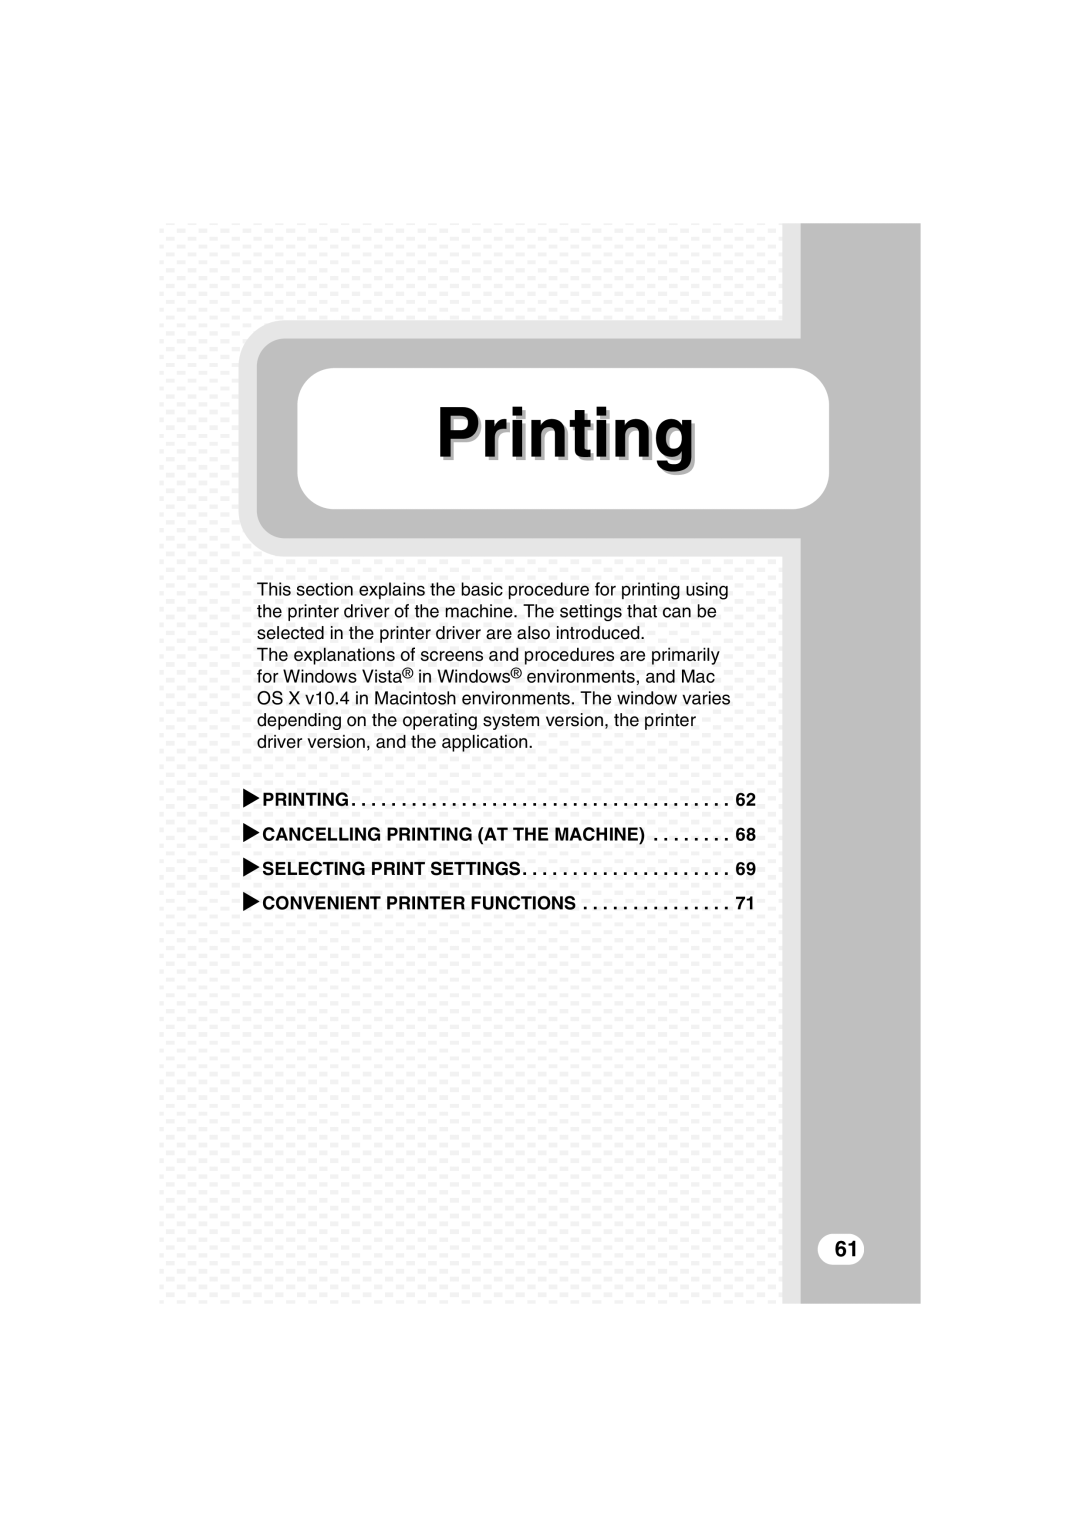 Sharp MX-C381 Xprinting Xcancelling Printing At The Machine, Xselecting Print Settings Xconvenient Printer Functions 